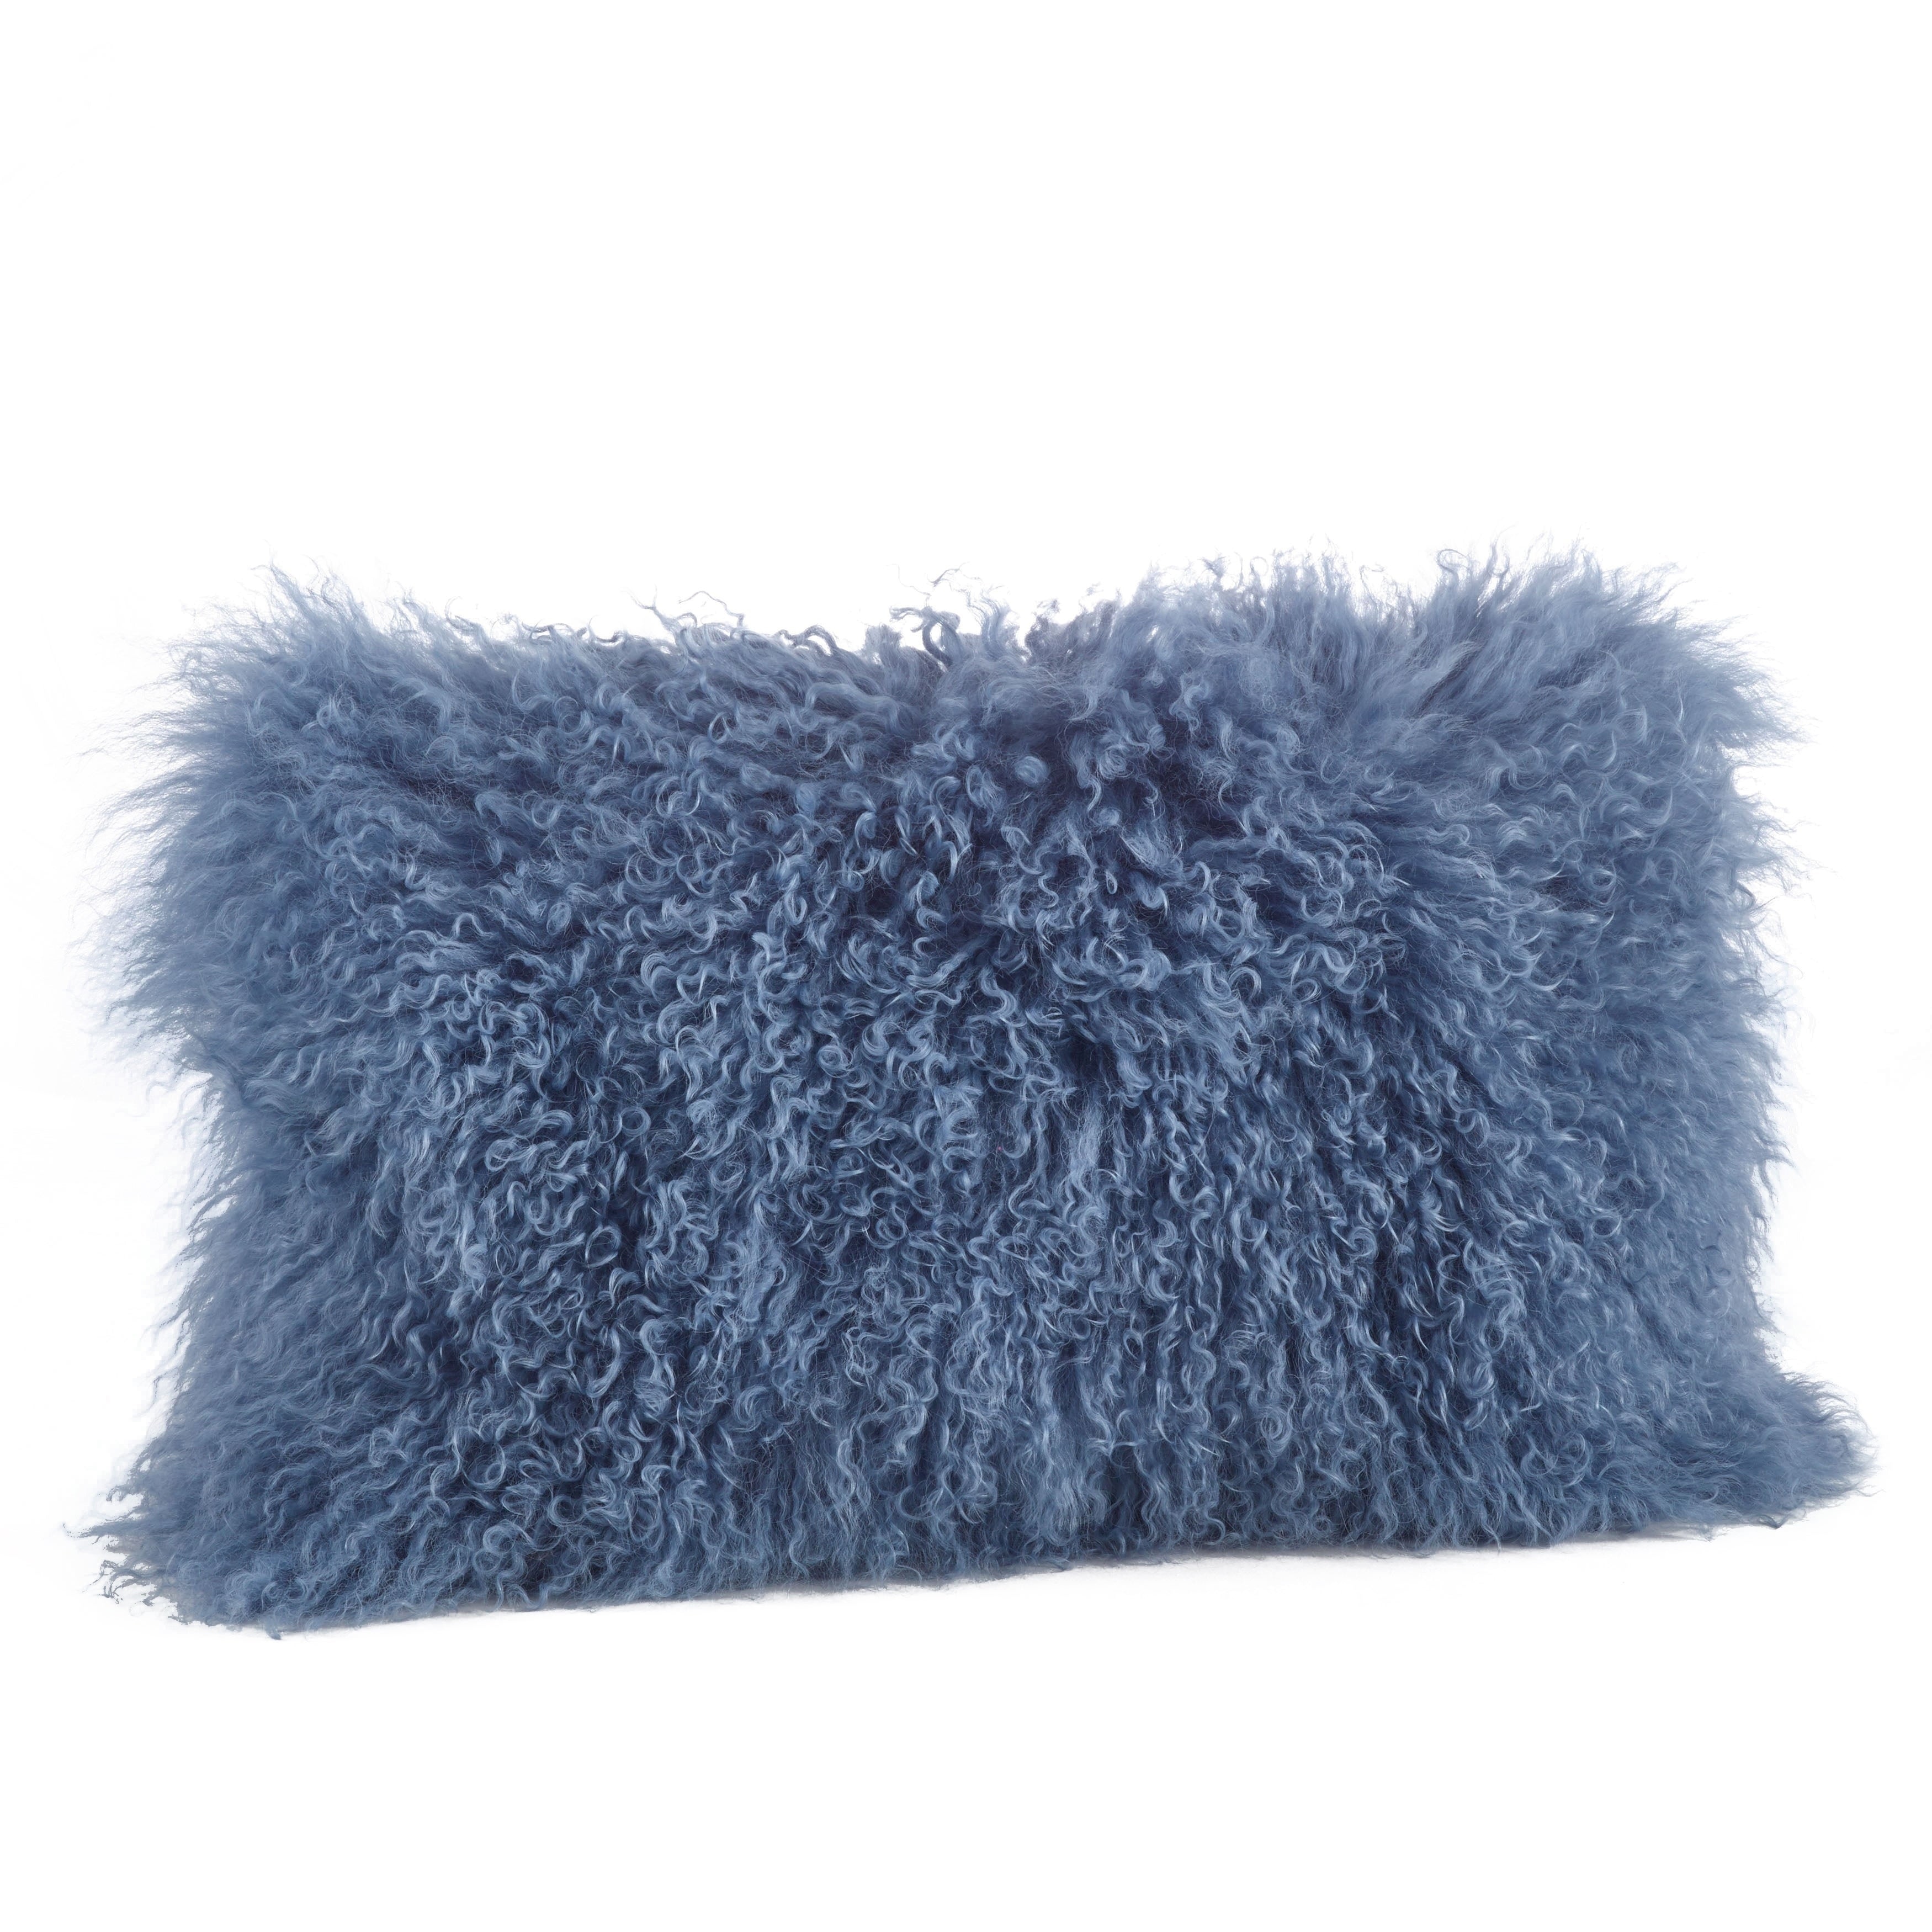 Fog SARO LIFESTYLE Mongolian Lamb Pillows 100% Wool Fur Throw Poly Filling 12 x 20